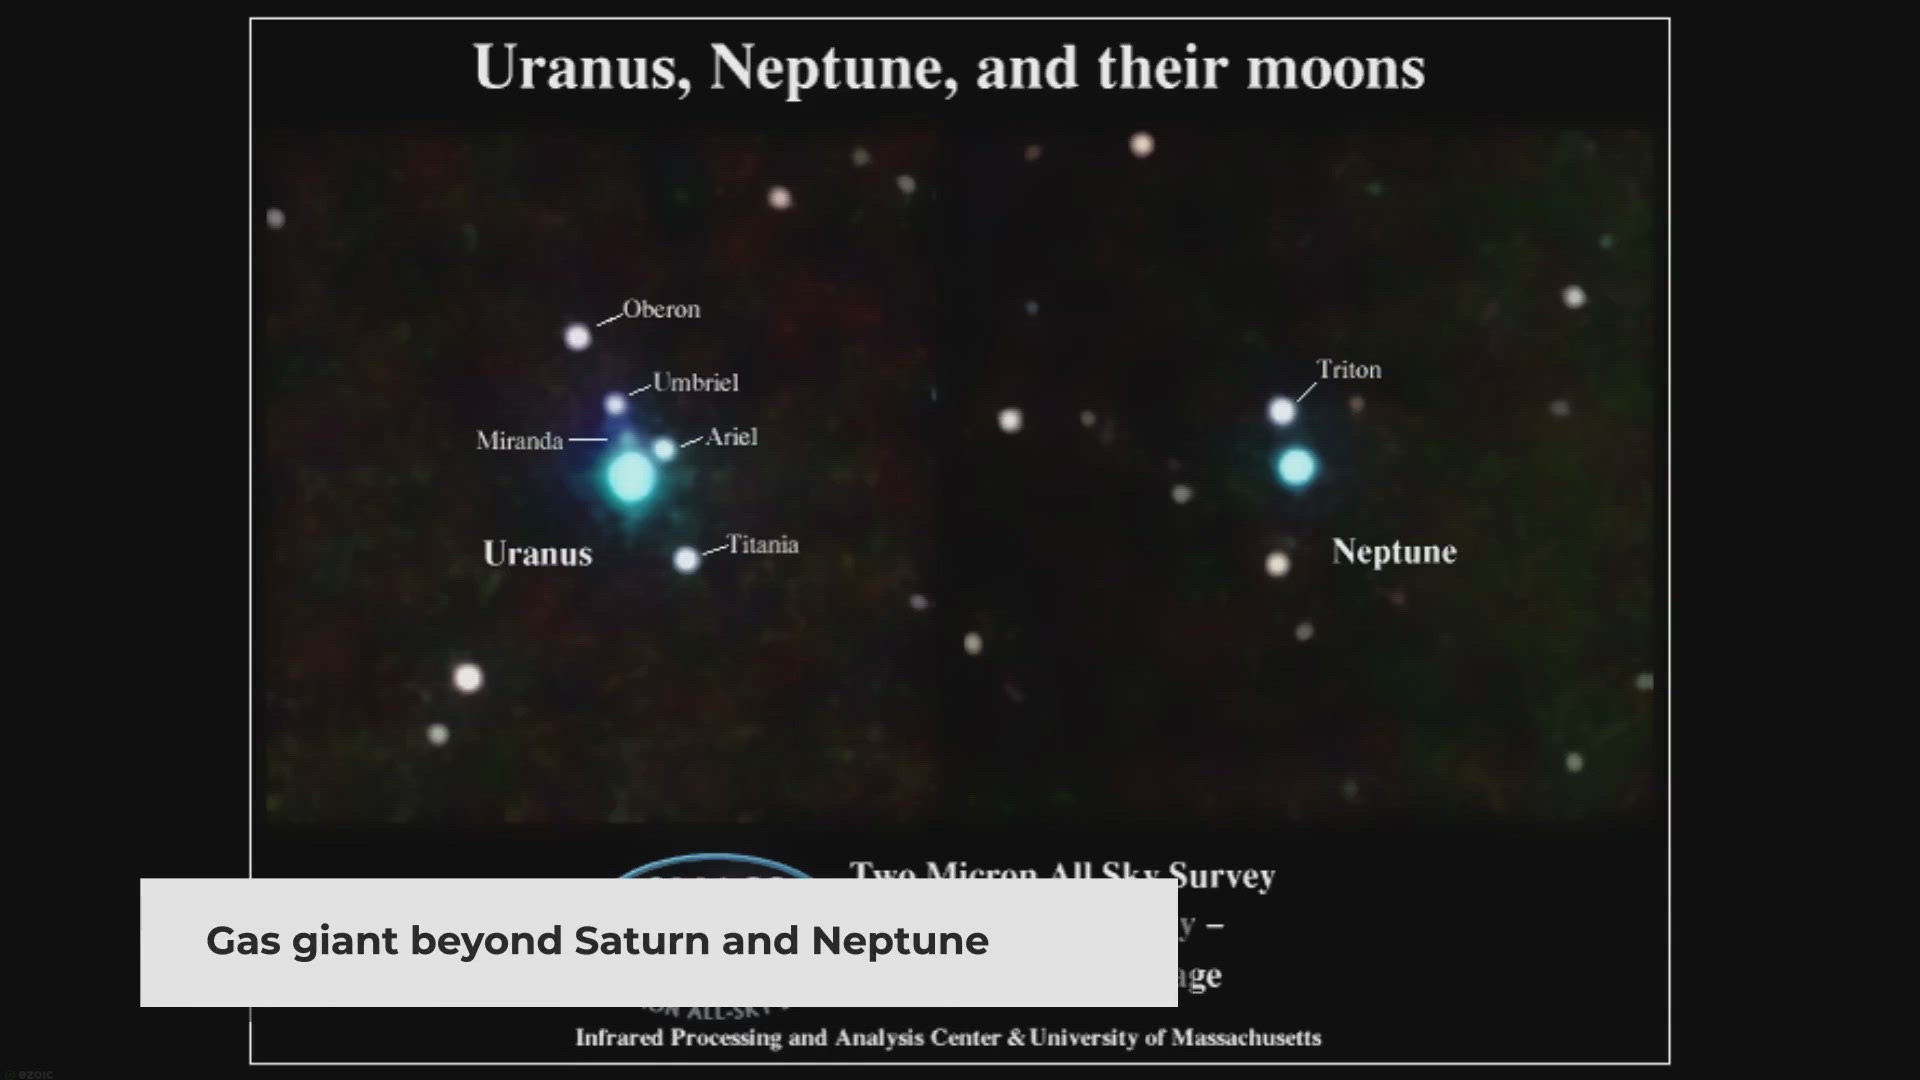 How did Uranus get its name?